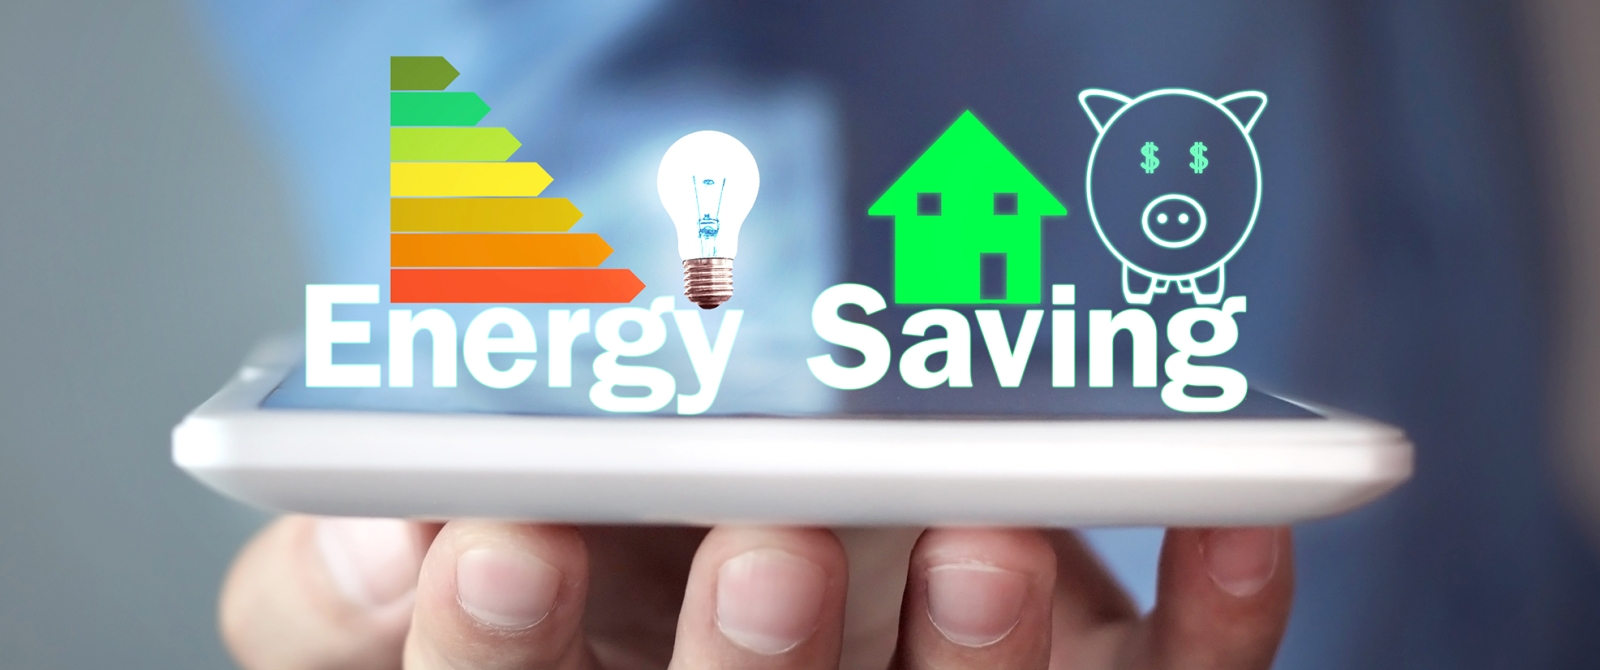 Energy savings photo graphic